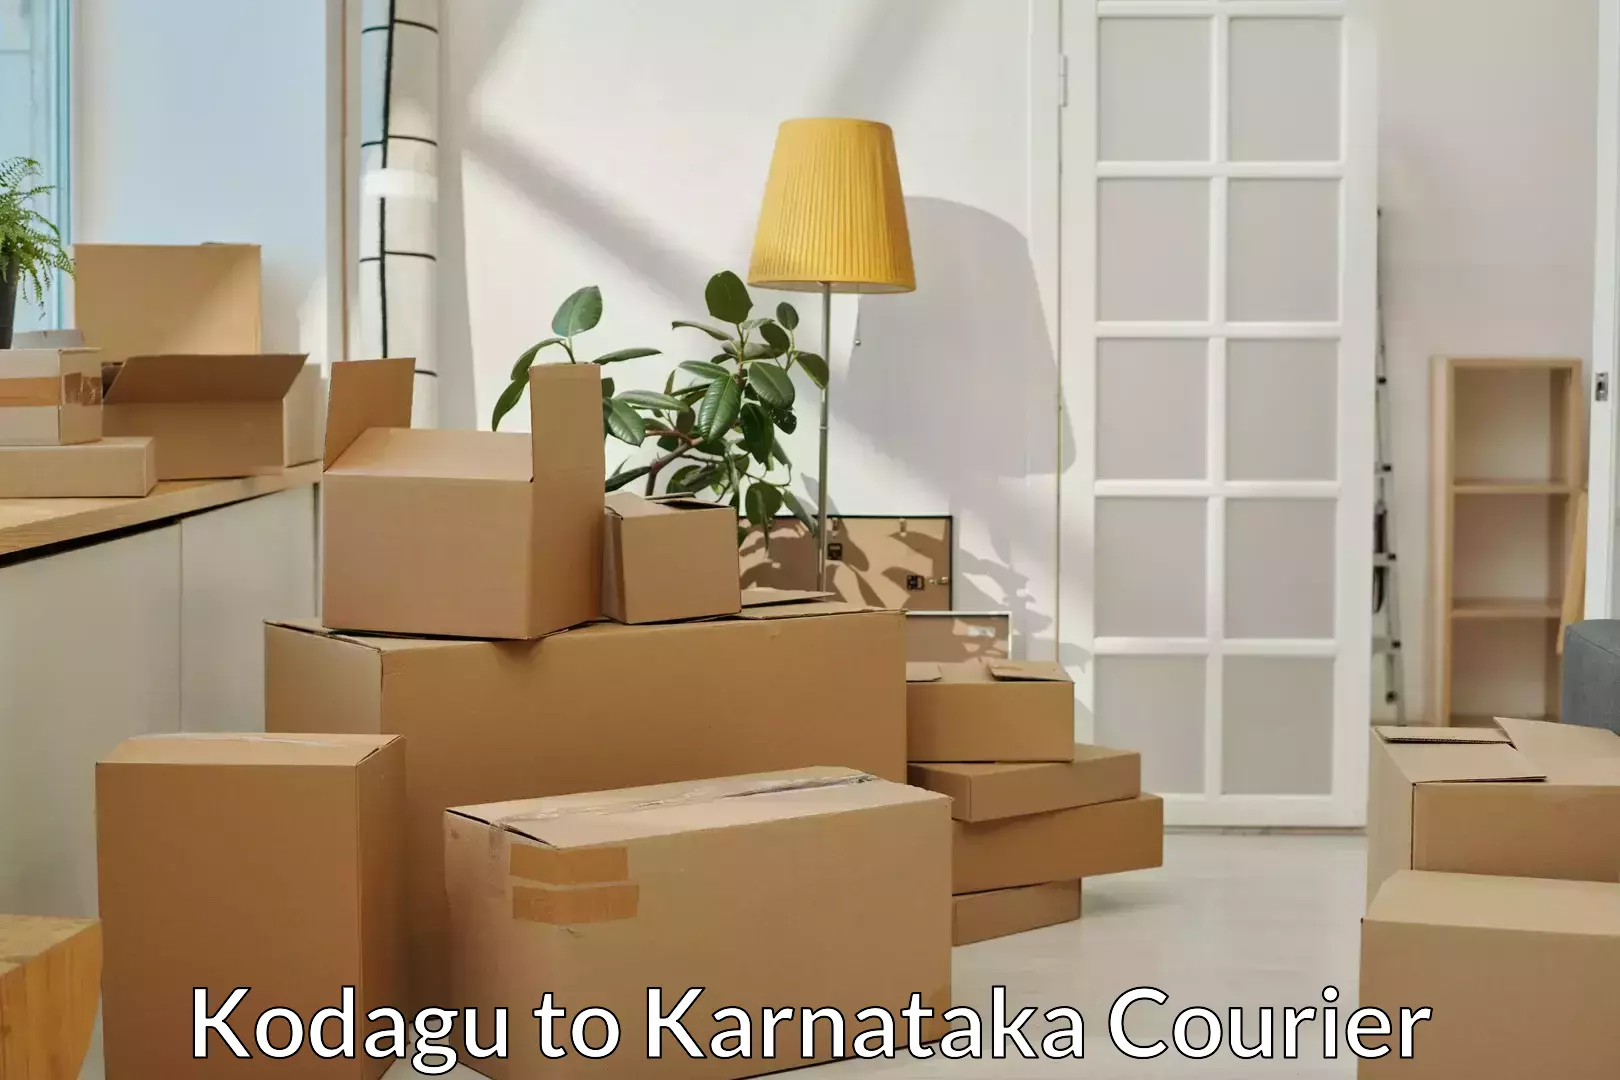 Household moving companies in Kodagu to Bangarapet